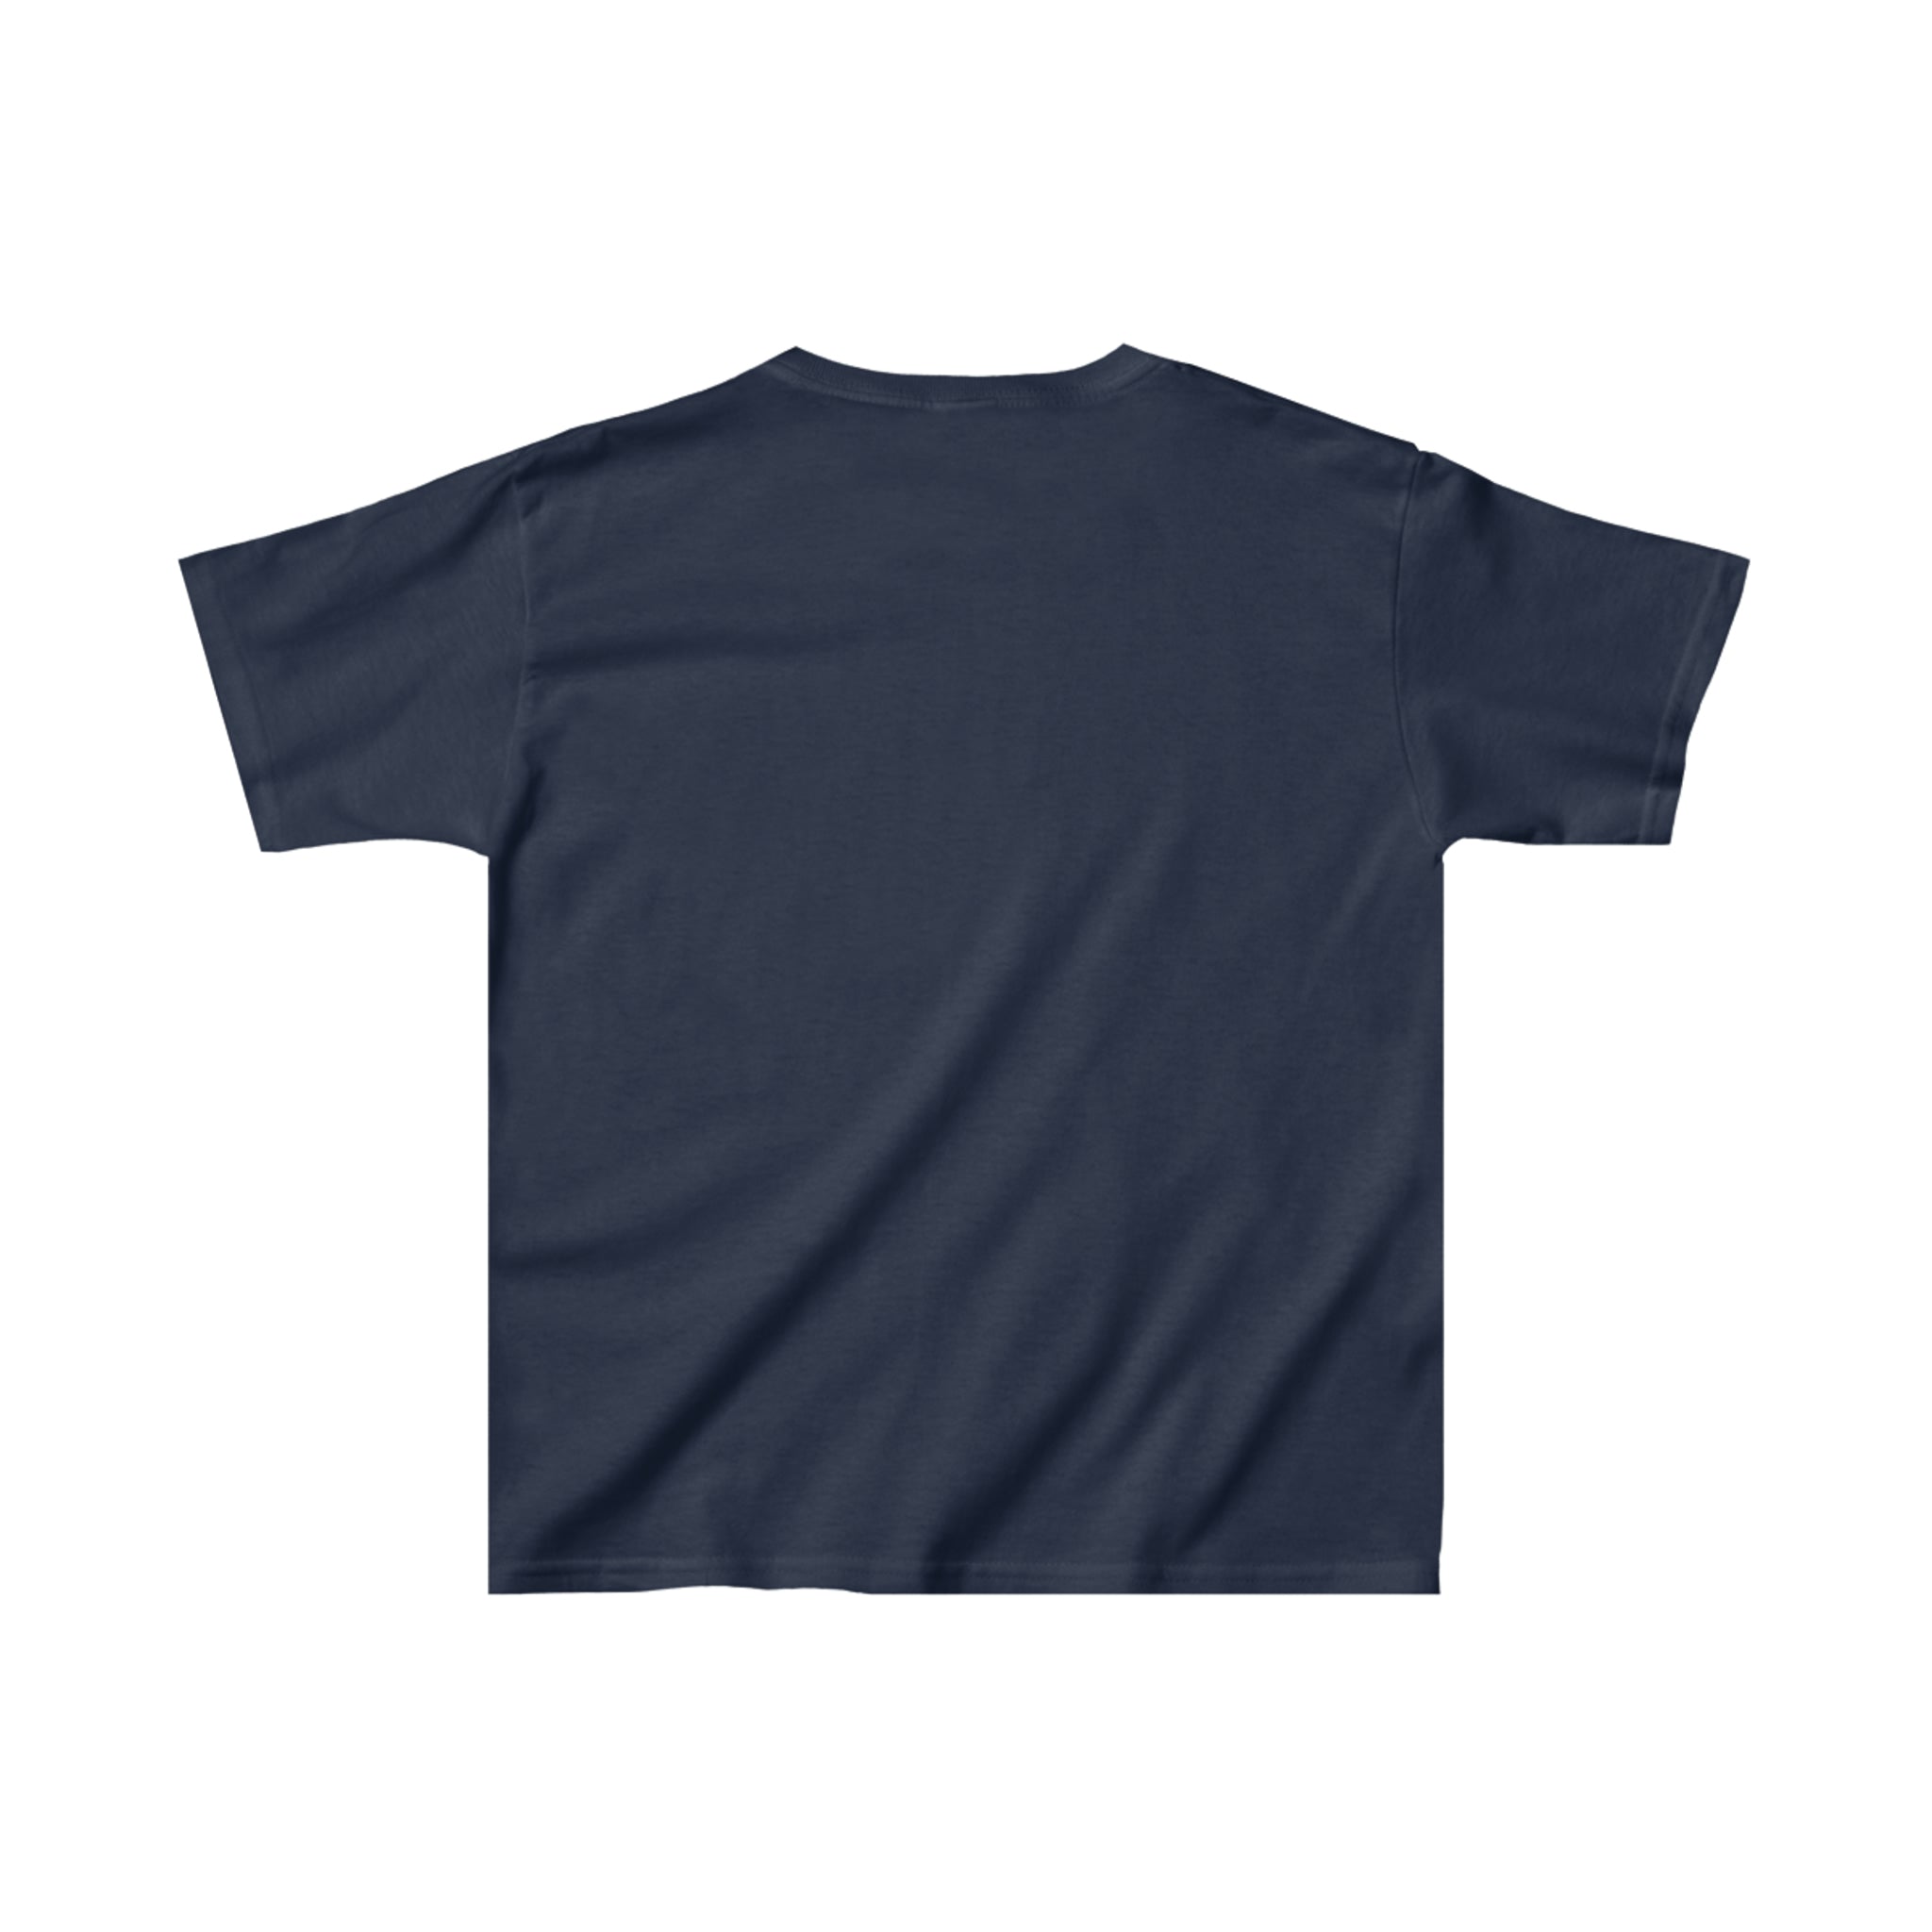 Arkansas Glaciercats T-Shirt (Youth)